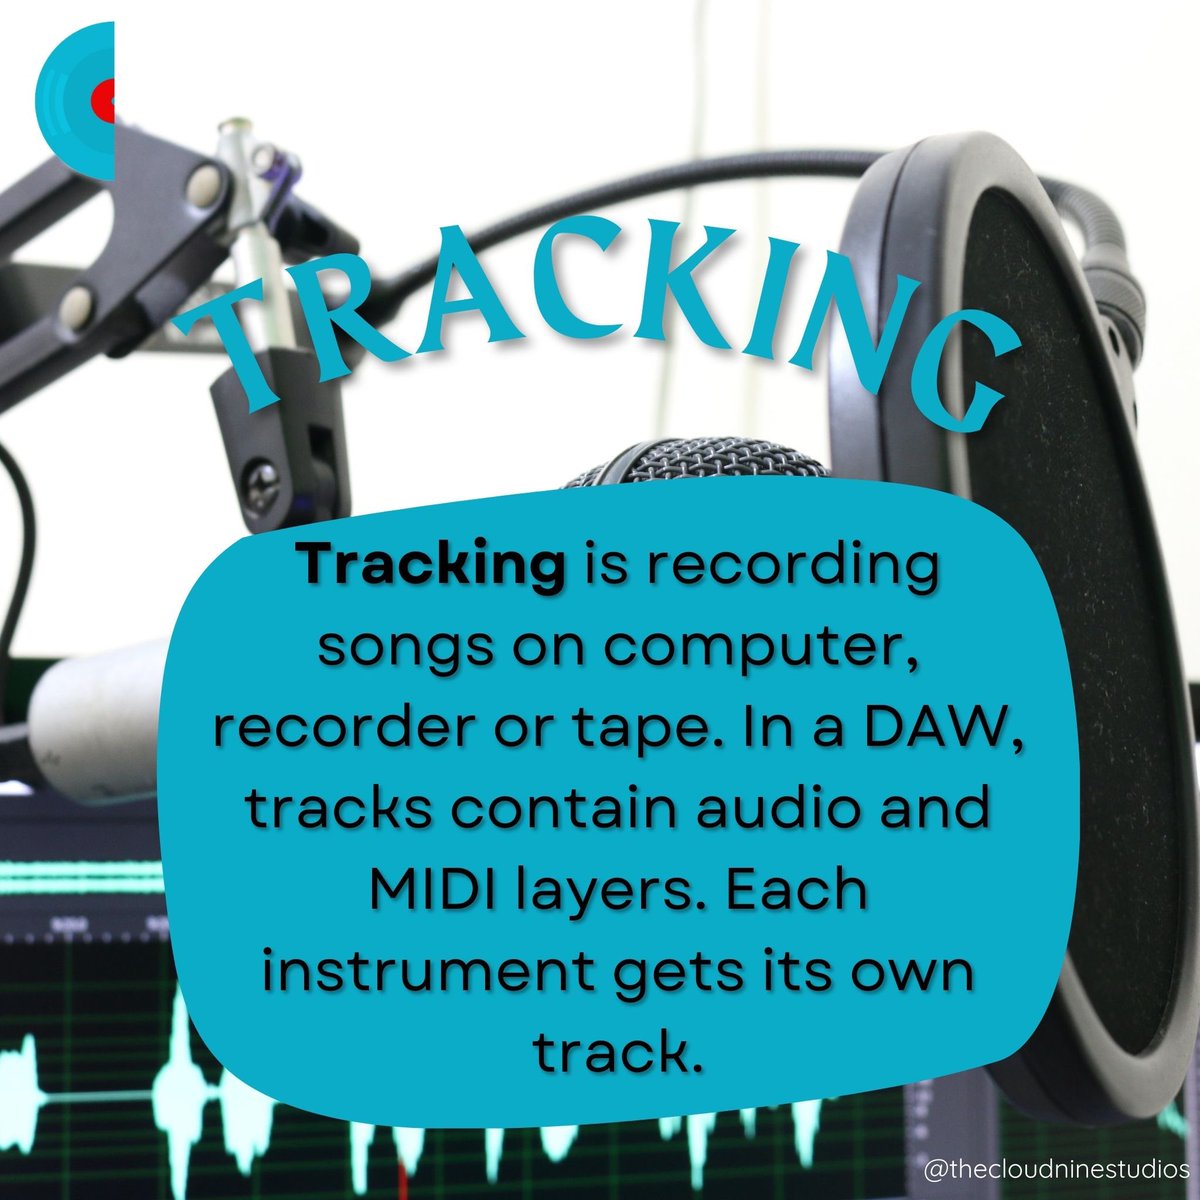 Tracking explained. 

#tracking #musicmakingterm #cloudninestudios #recordingstudio